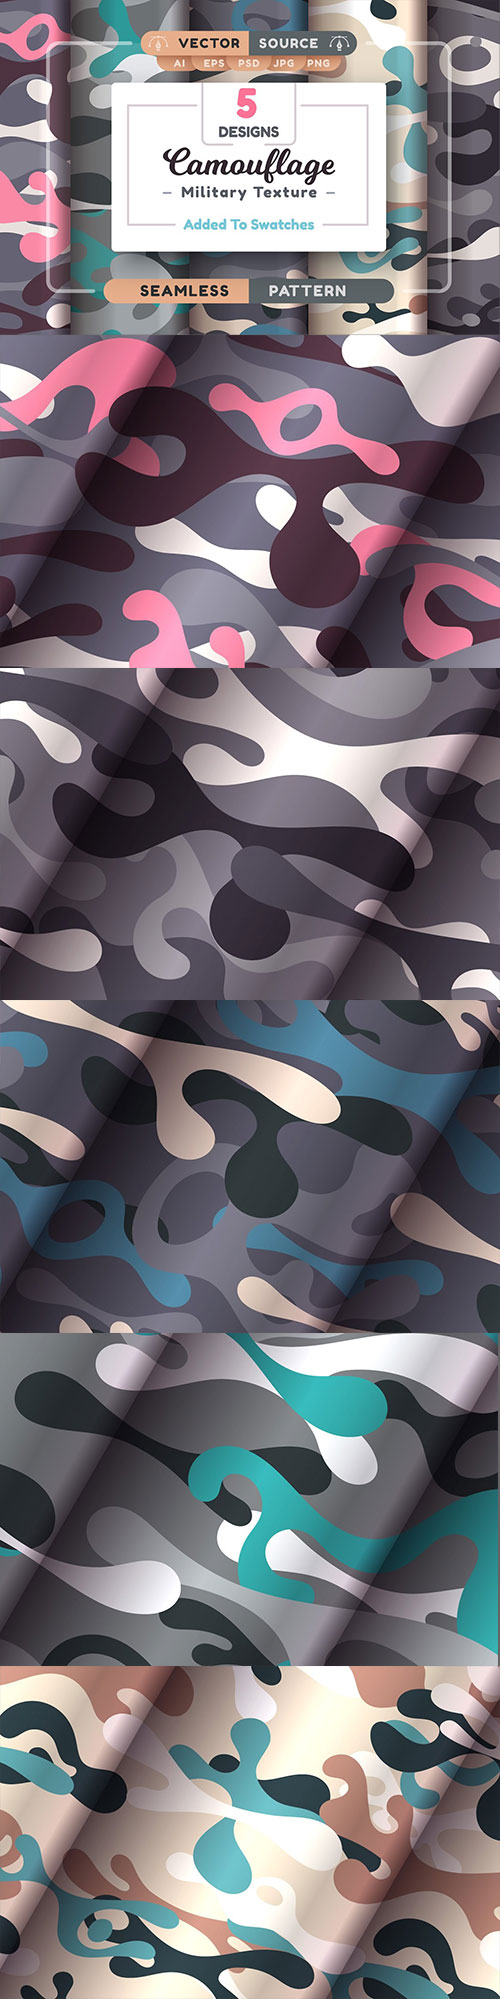 Camouflage Seamless Patterns 10175277